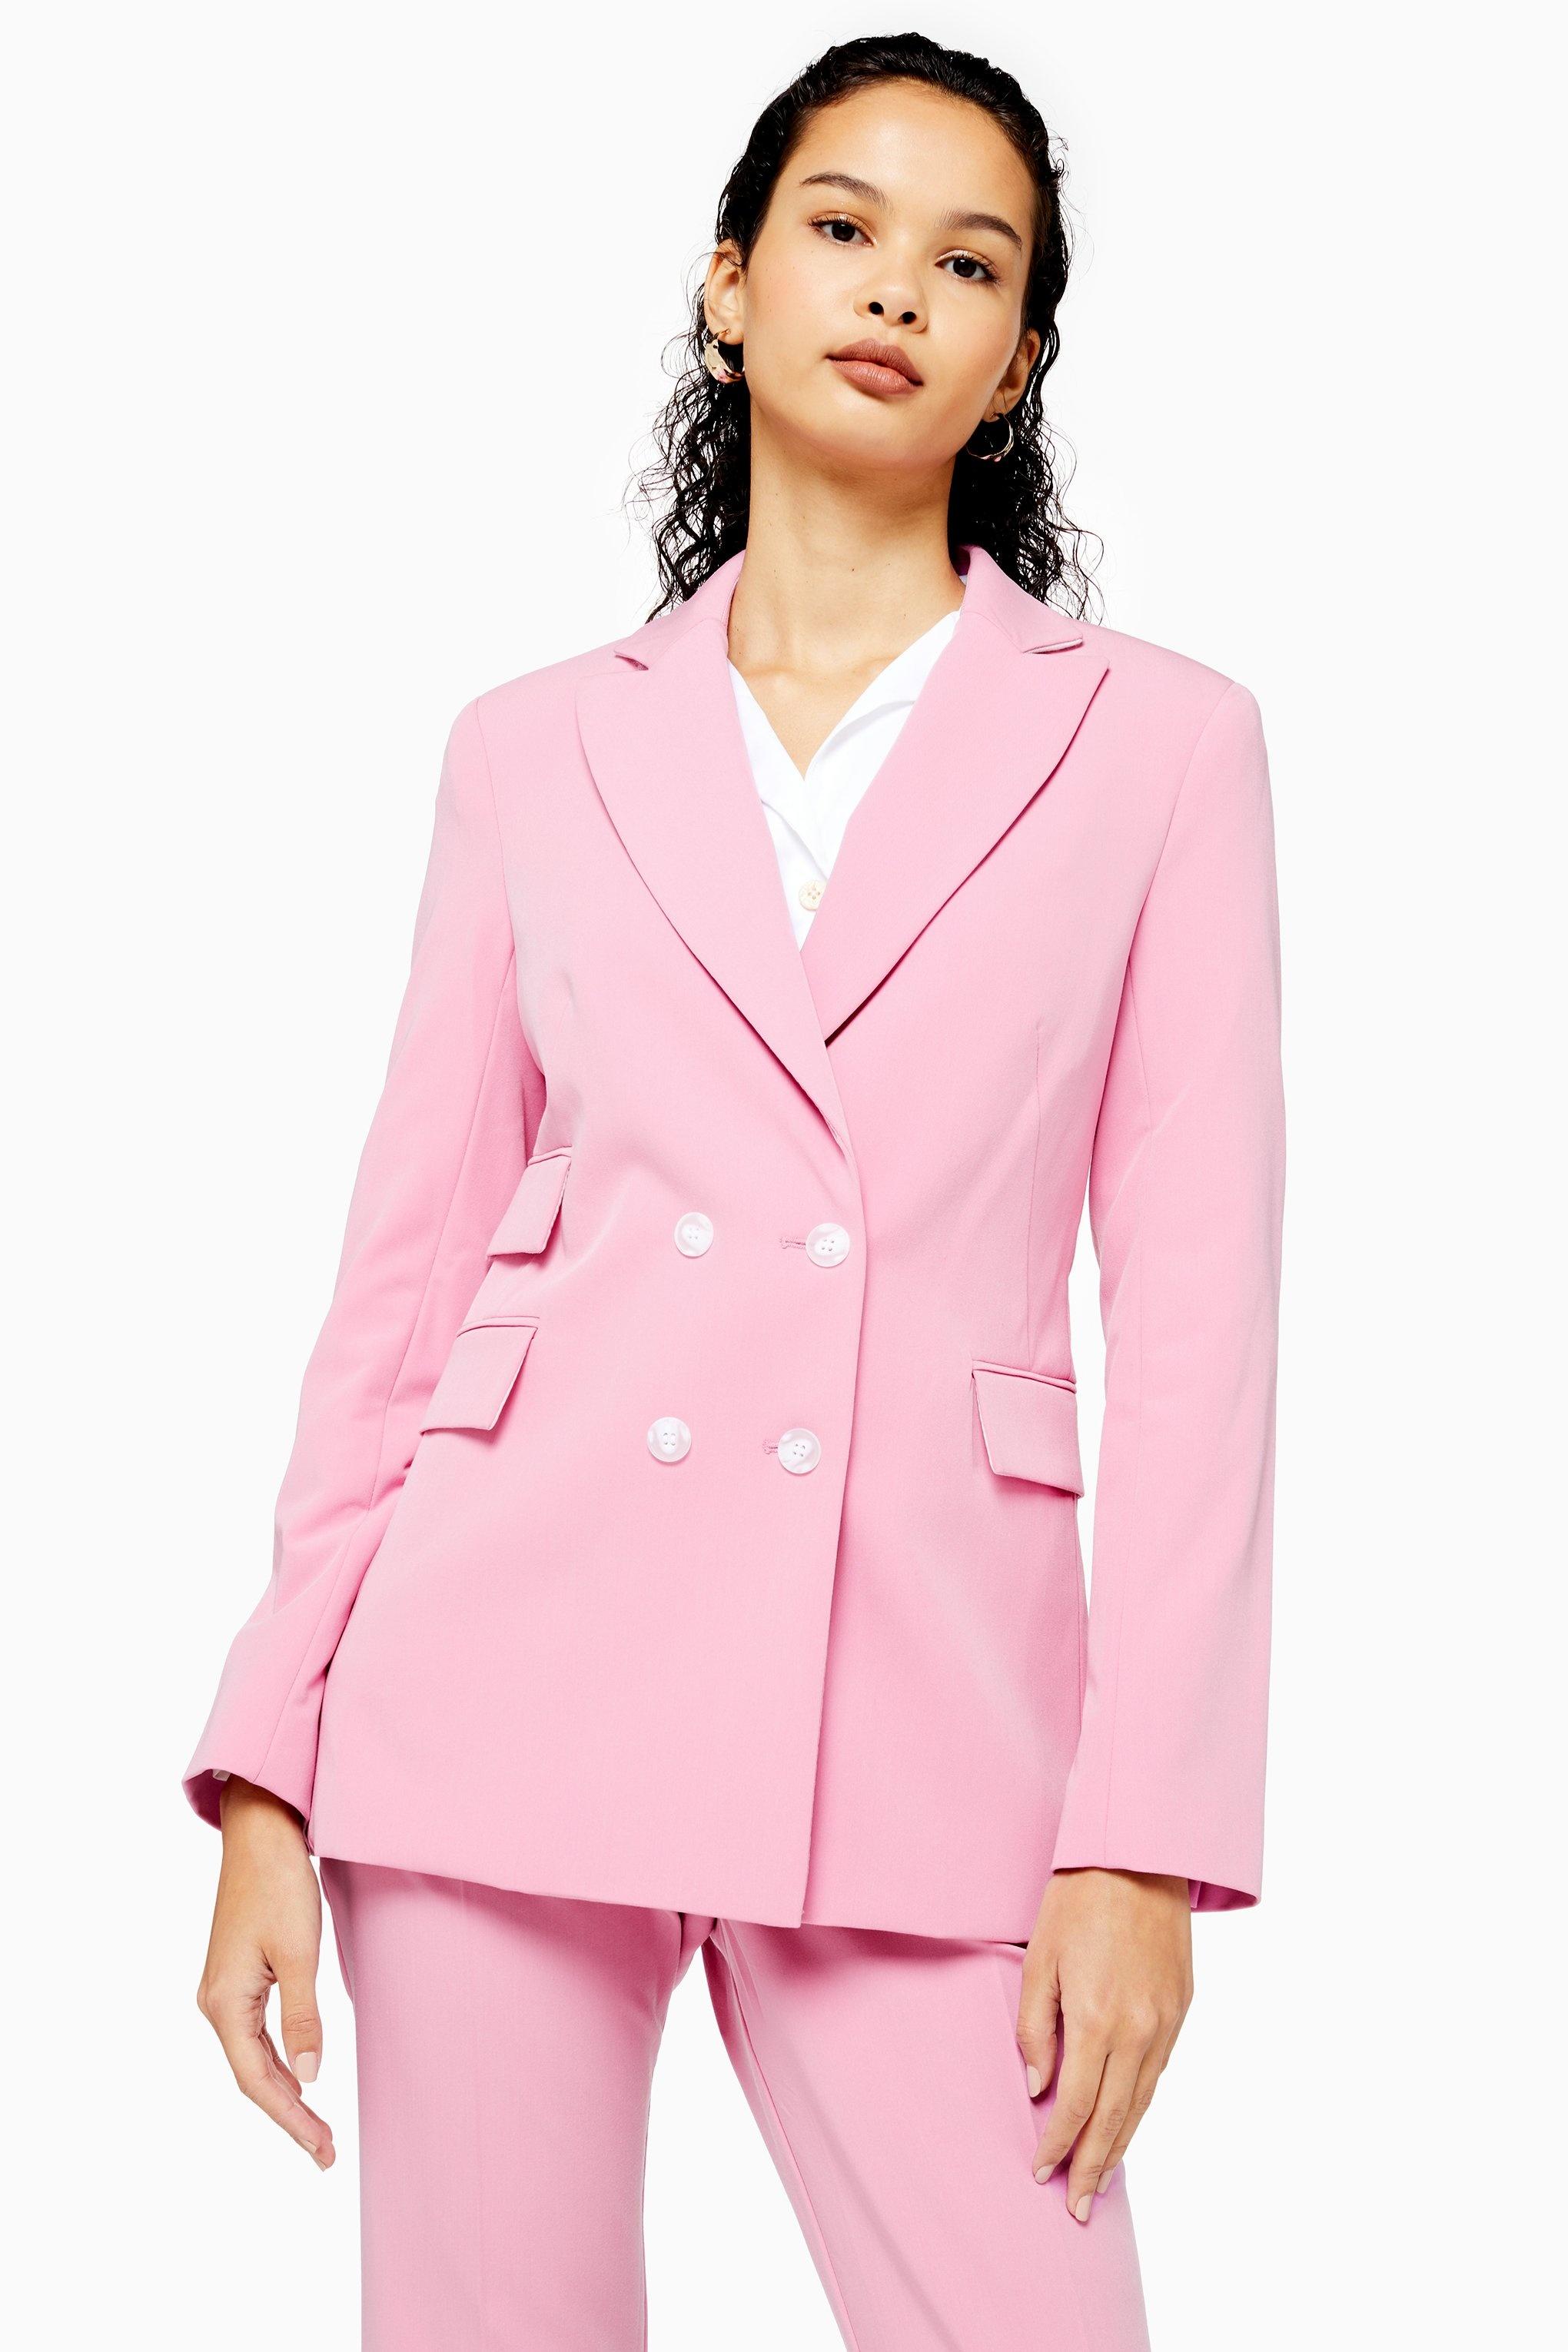 topshop pink blazer dress